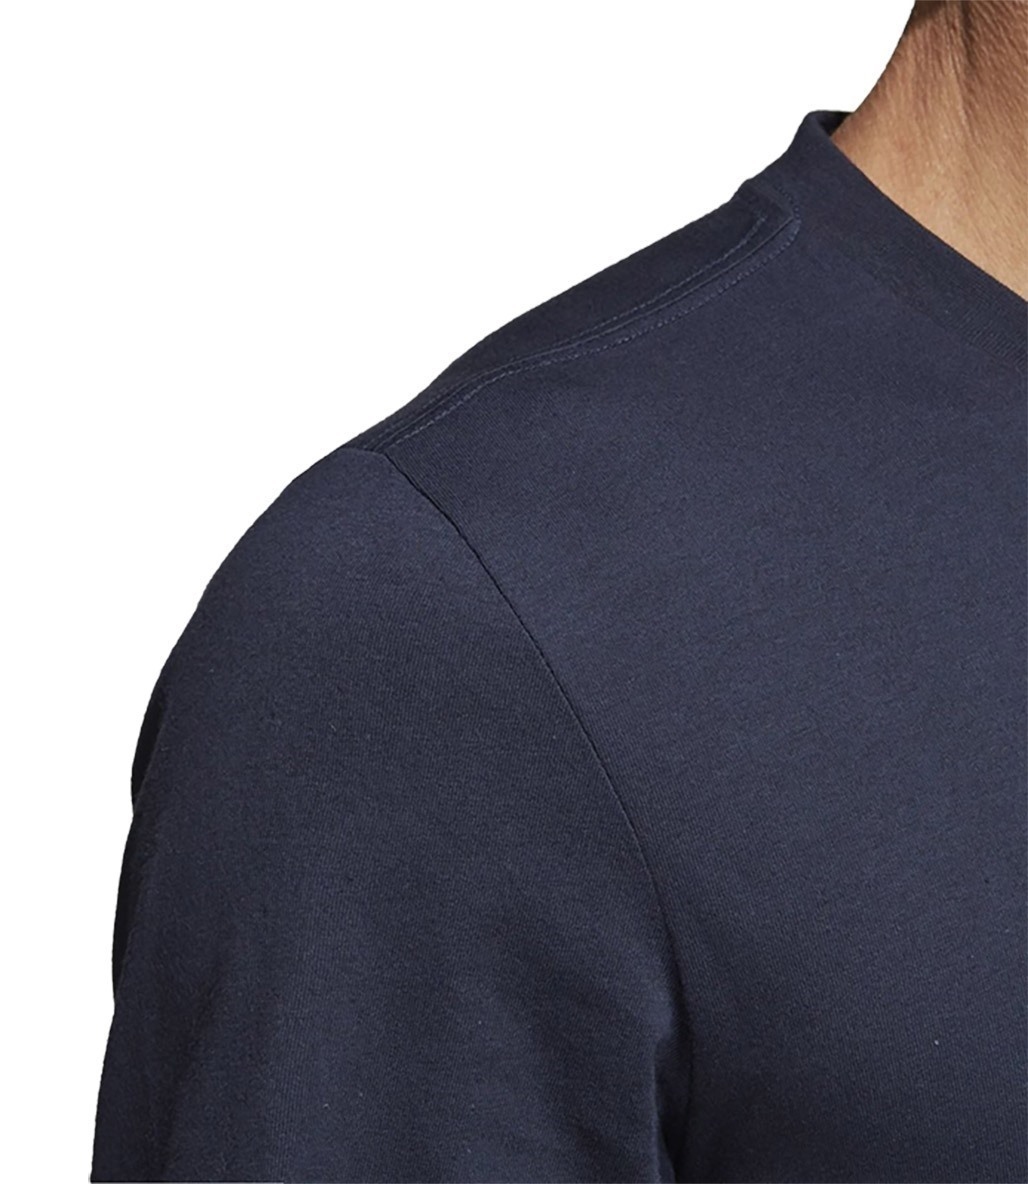 Adidas Essentials Plain T-Shirt Lacivert